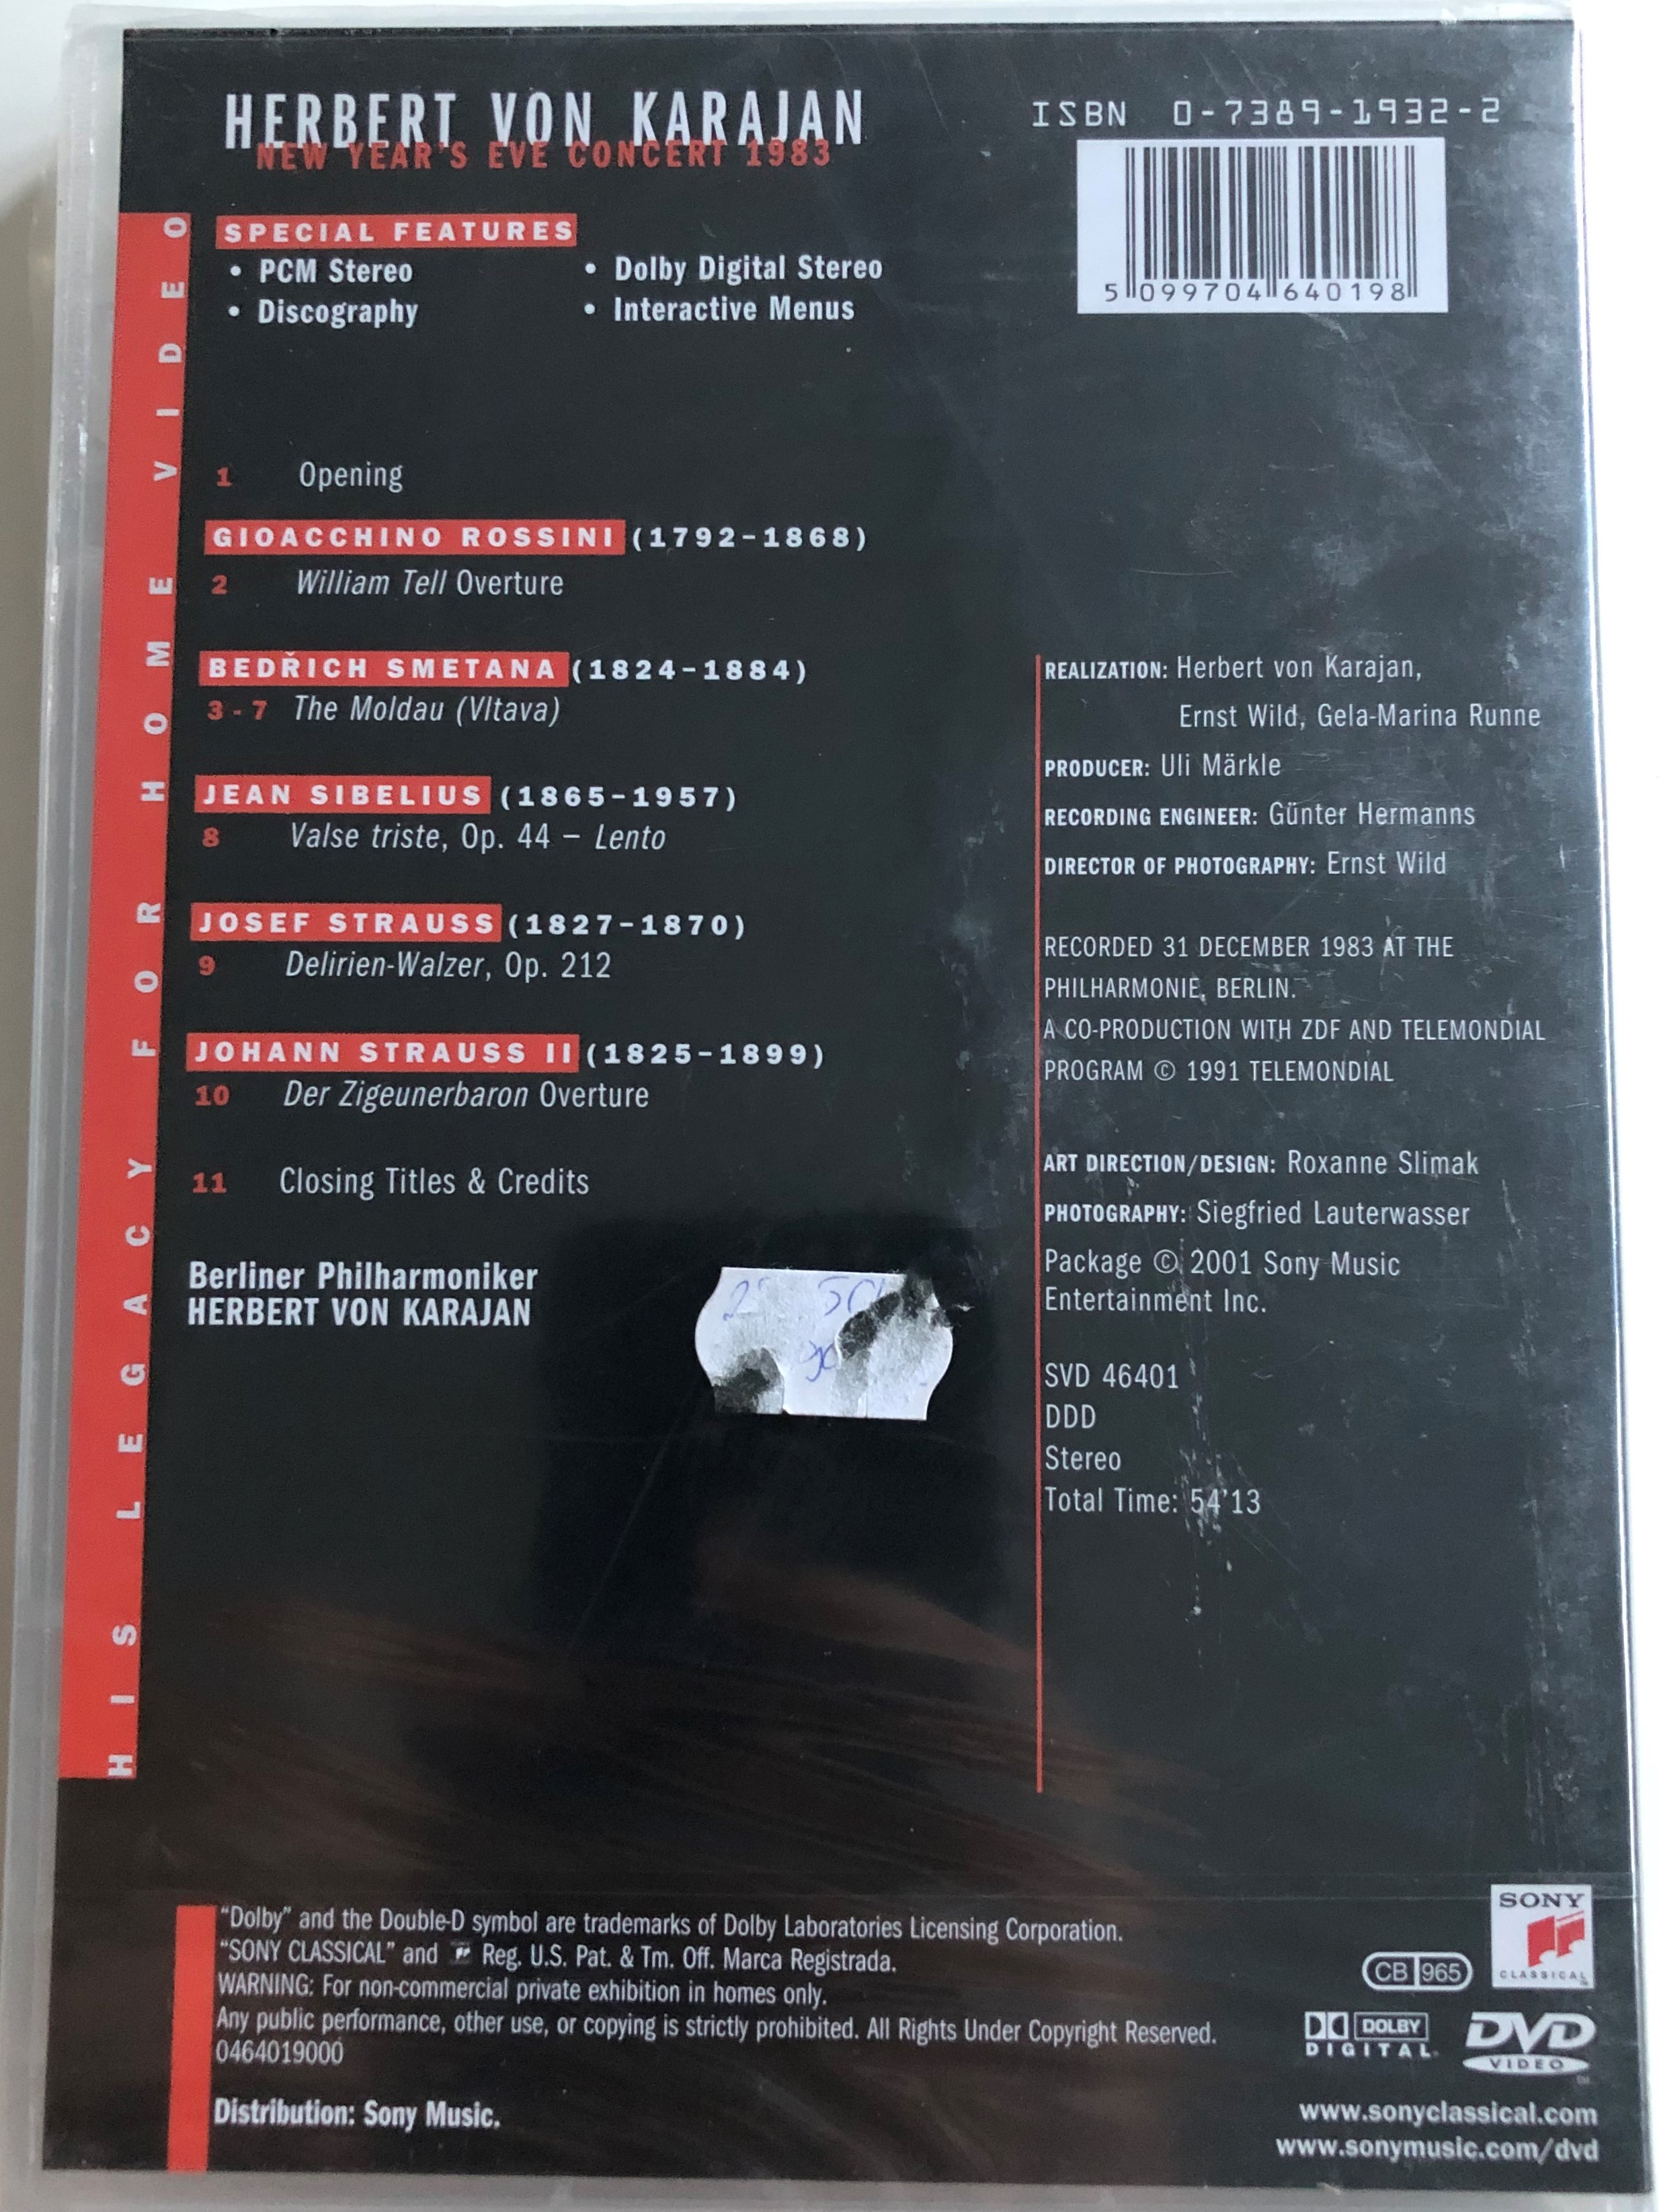 herbert-von-karajan-new-year-s-eve-concert-dvd-1983-berliner-philharmoniker-rossini-smetana-sibelius-josef-strauss-johann-strauss-jr.-svd-46401-2-.jpg